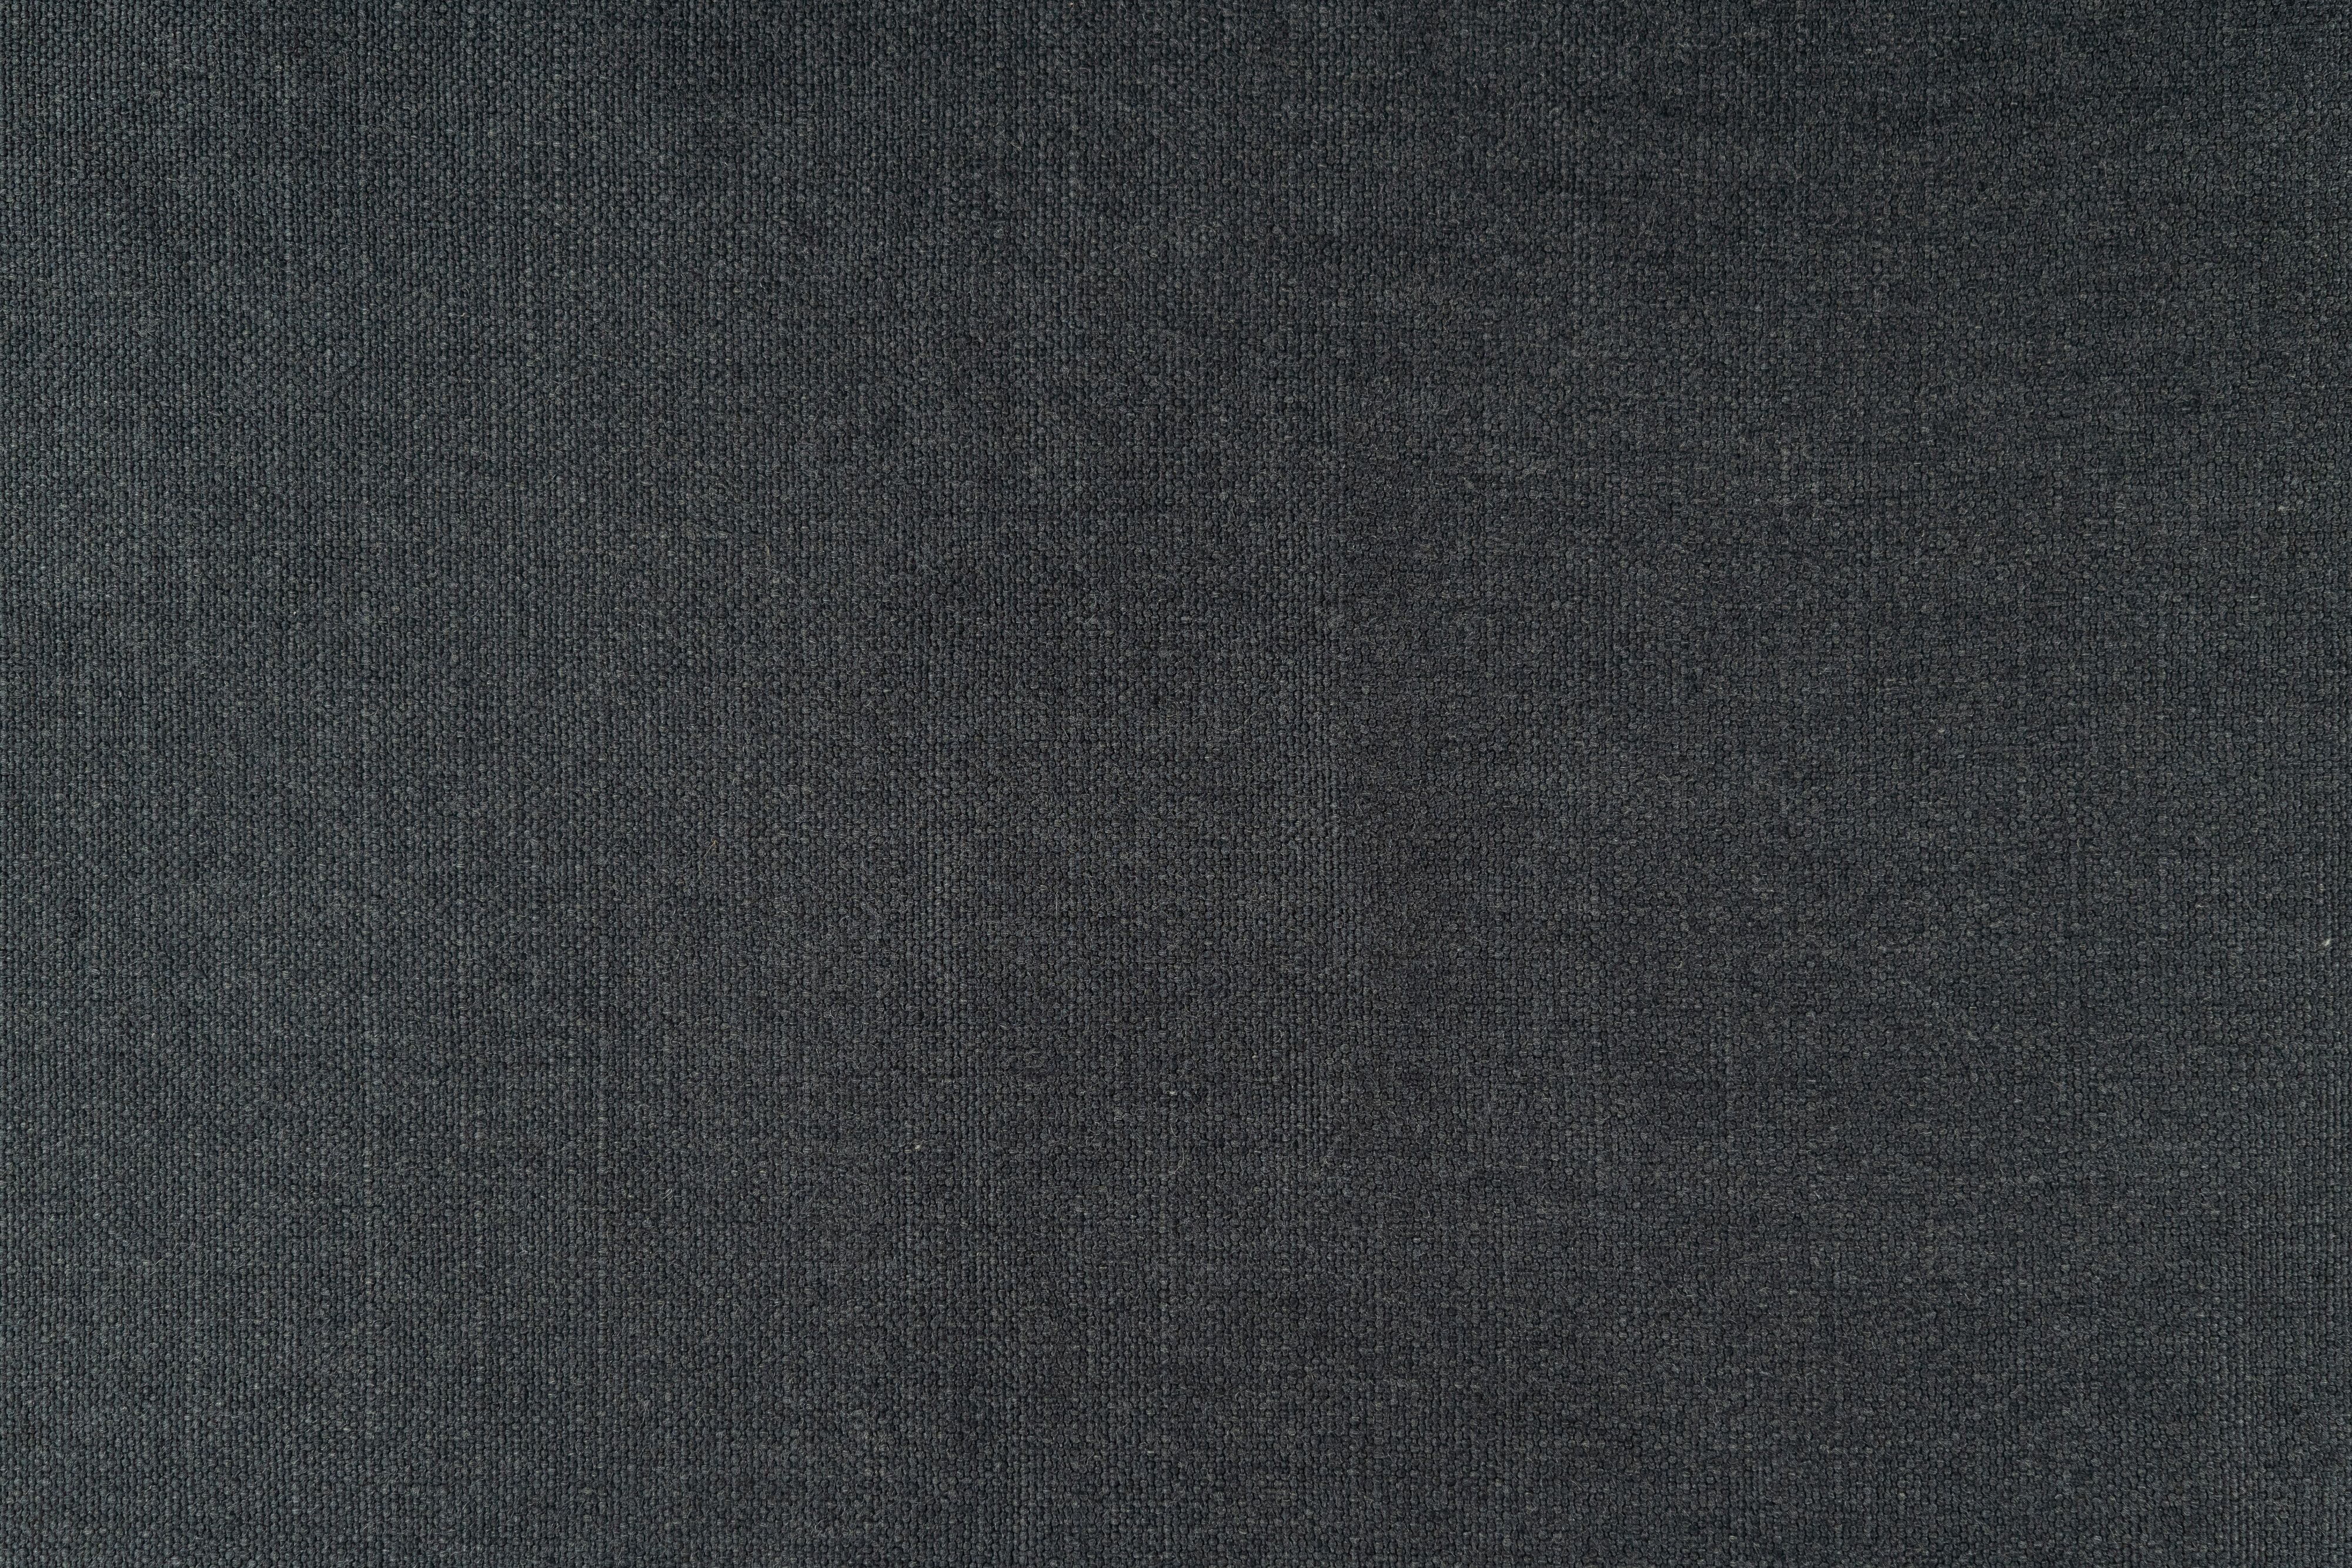 Canvas Or Denim Textile Like Cloth Textured Effect Dark Black